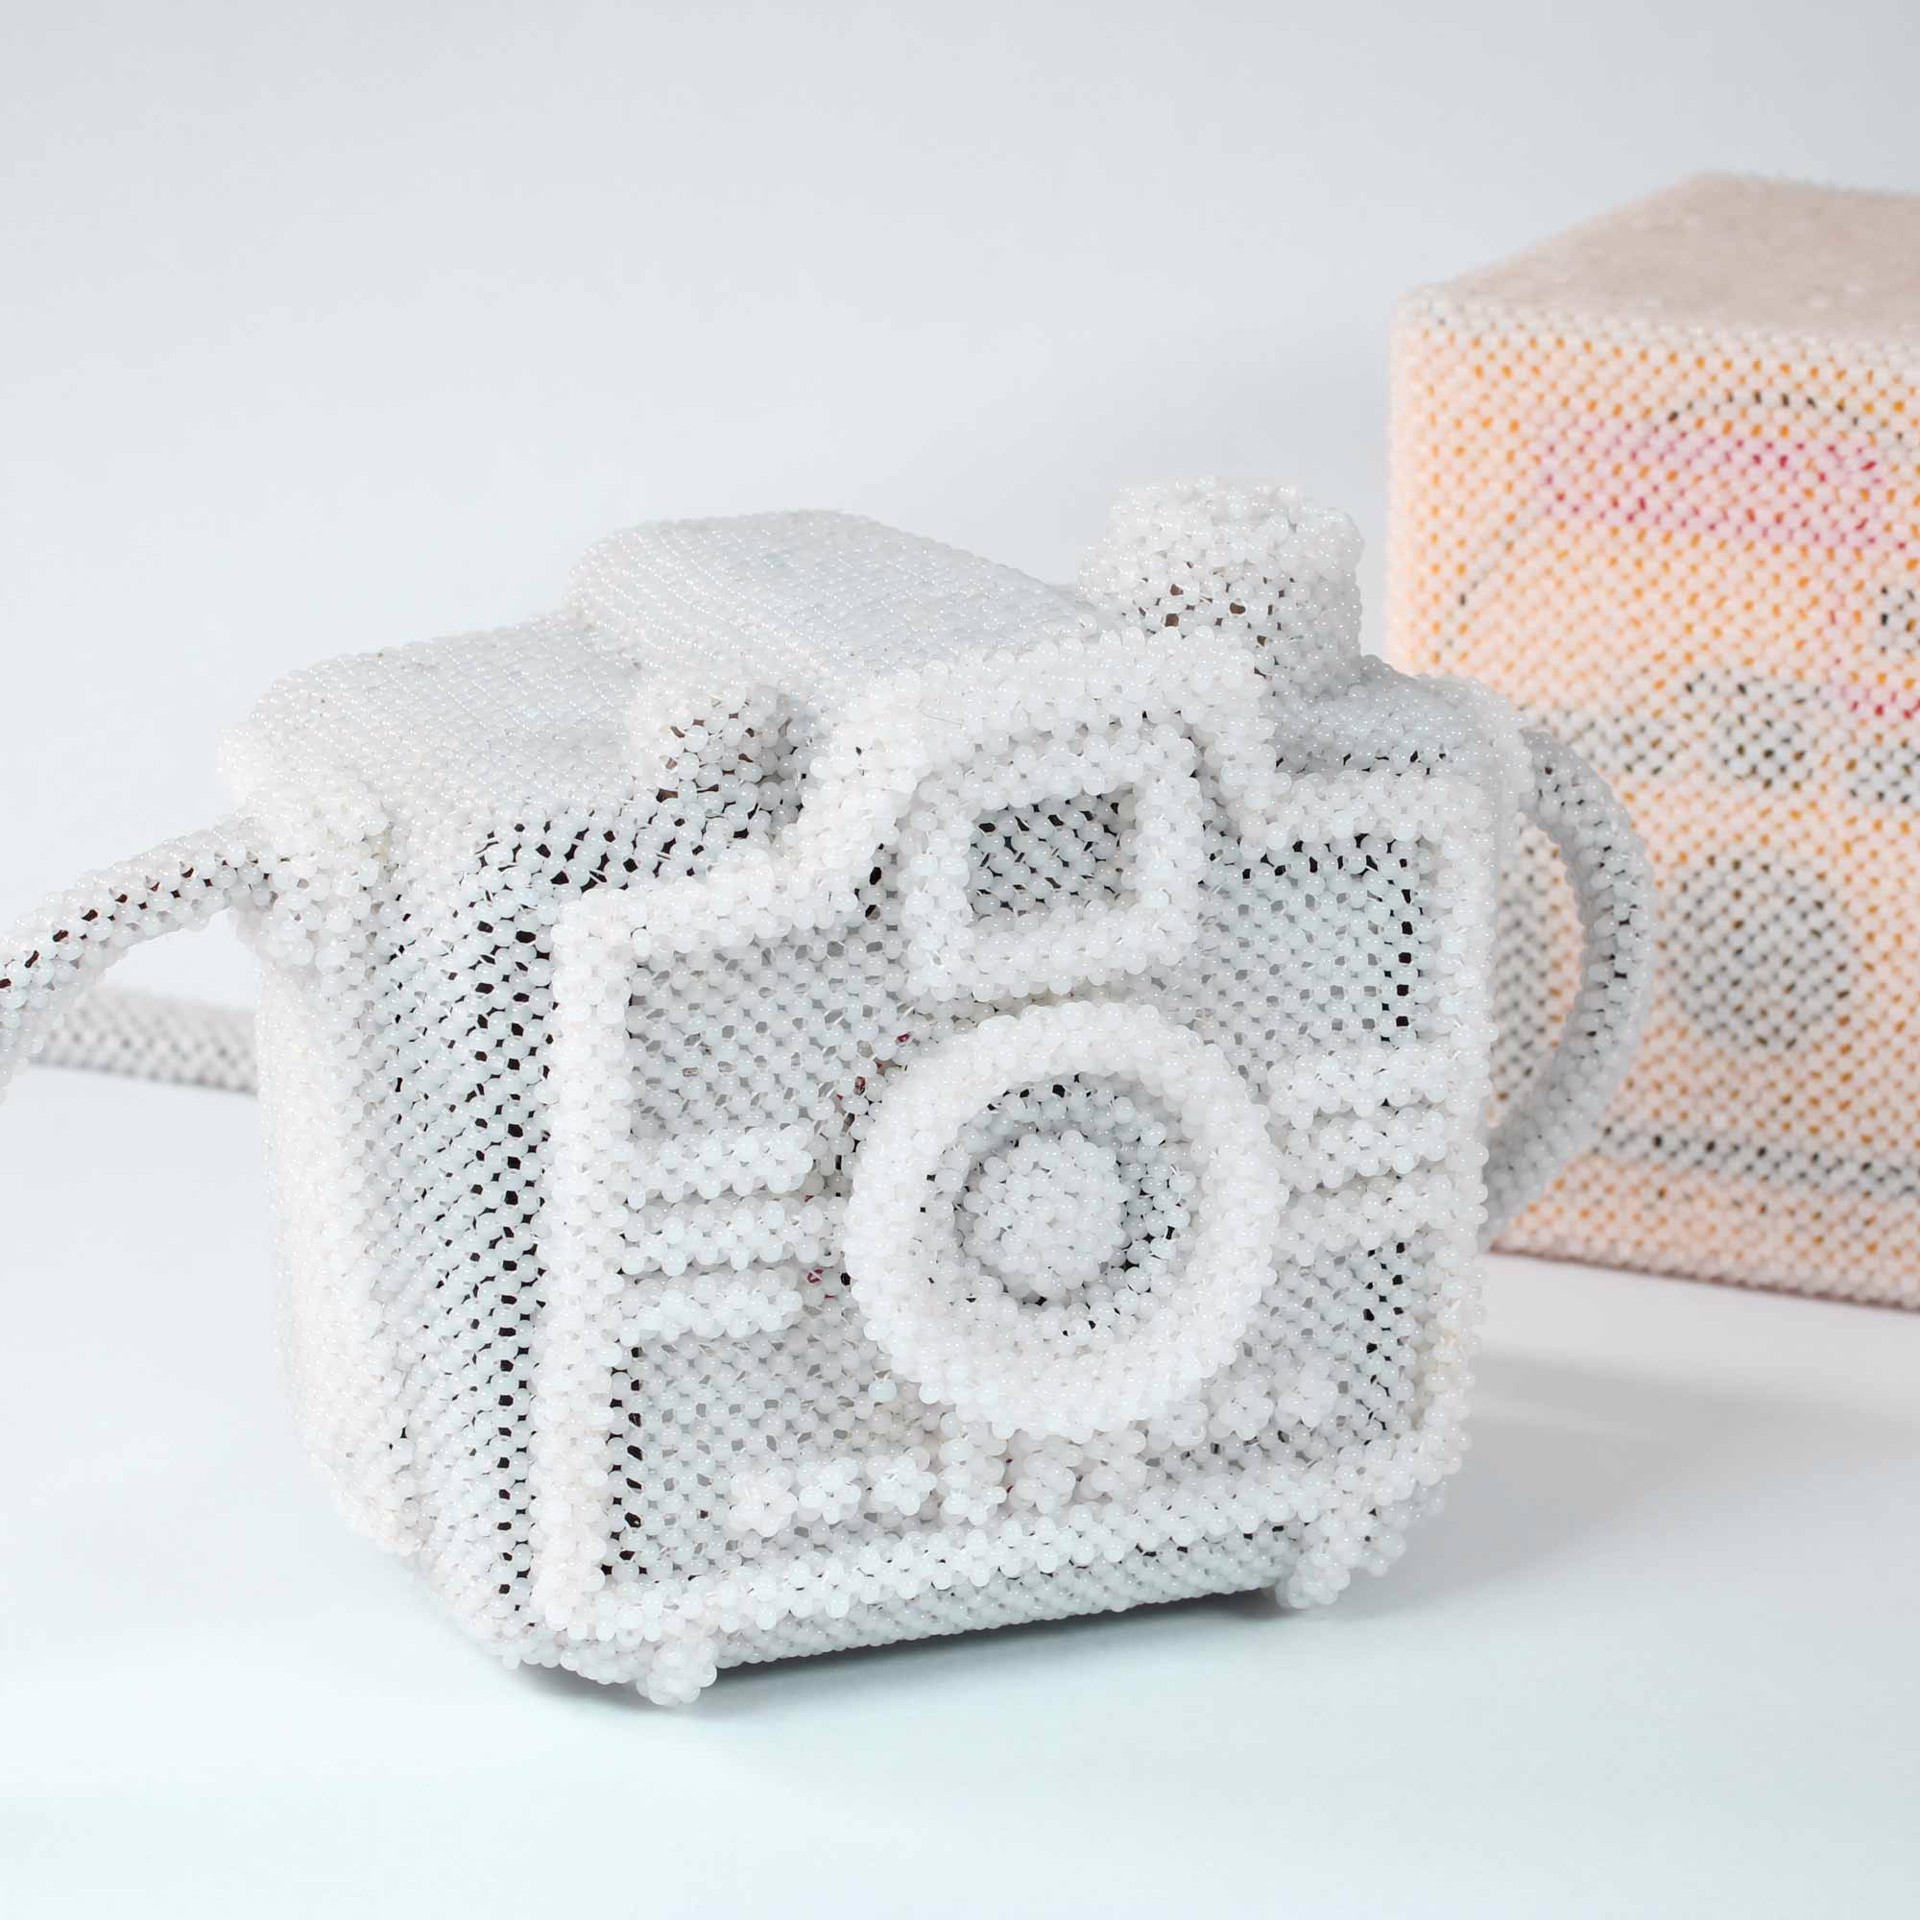 Brownie Camera and Box by David Chatt